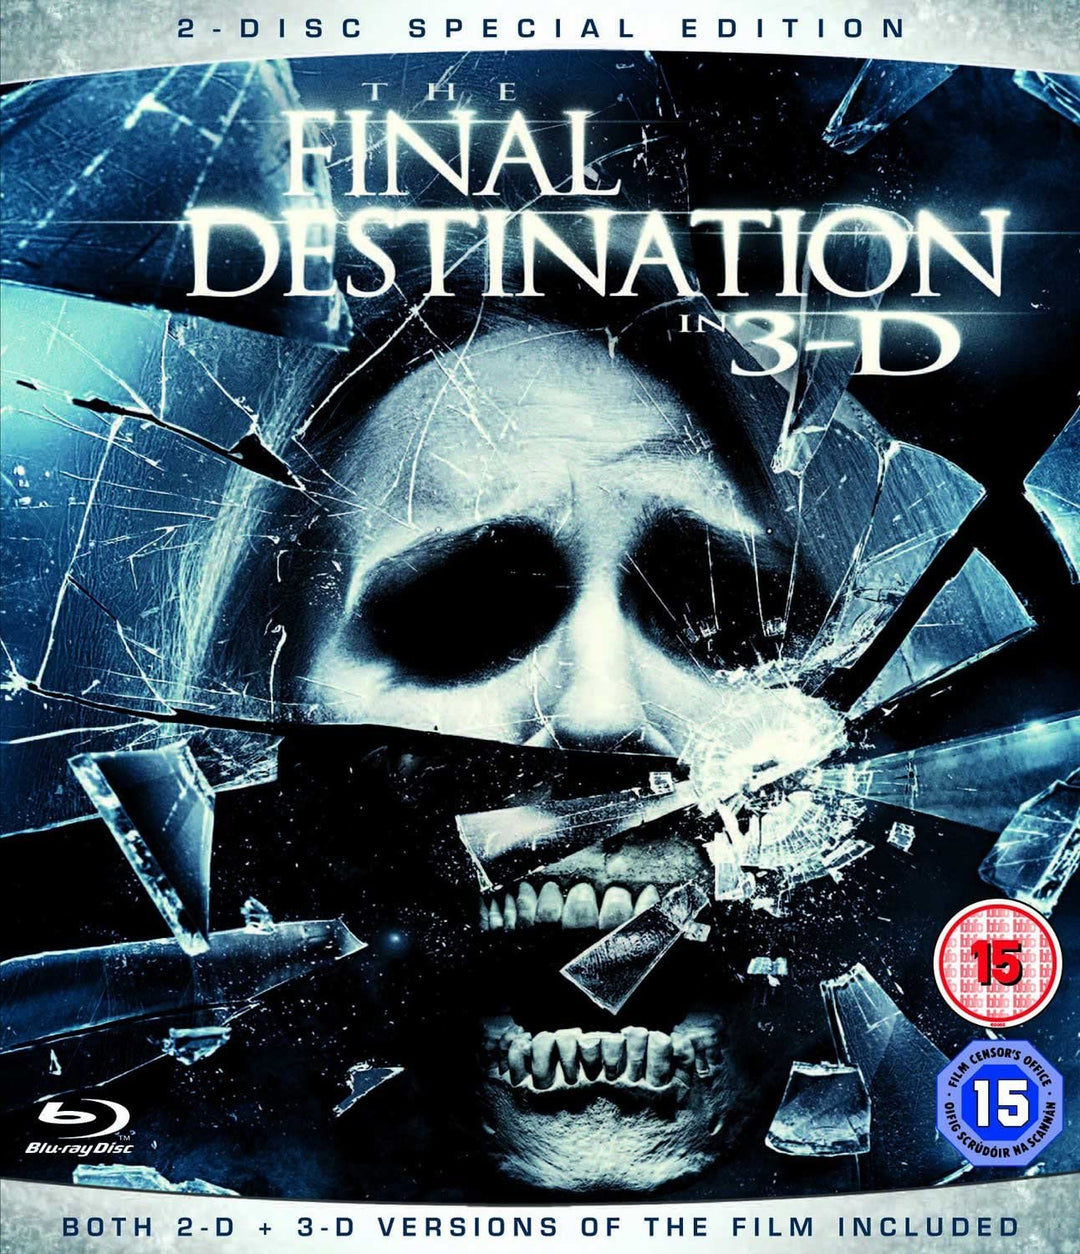 La destinazione finale in 3-D, quarta puntata [Blu-ray]